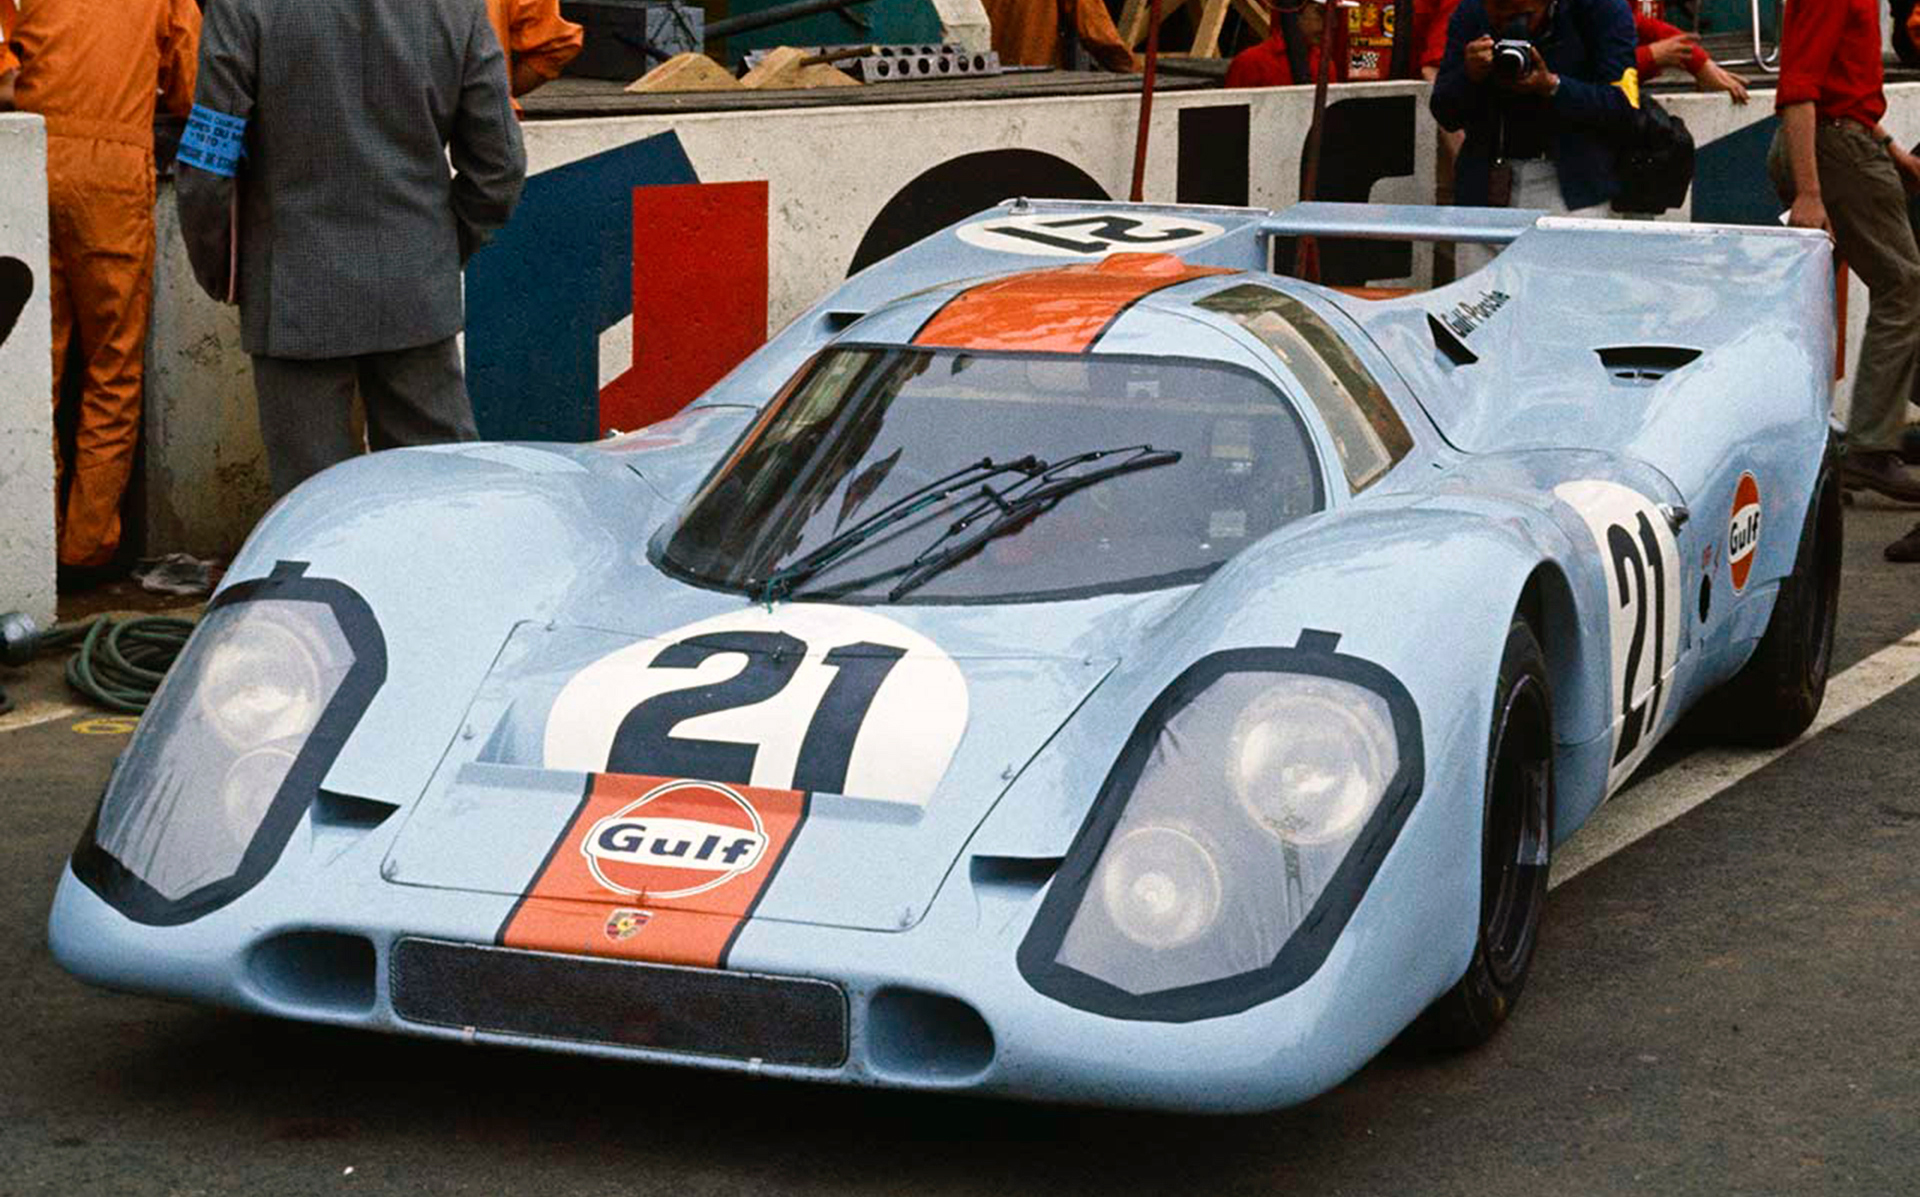 La dinastía de autos exitosos en carreras de larga duración de Porsche comenzó con el famoso e icónico 917 de 1970